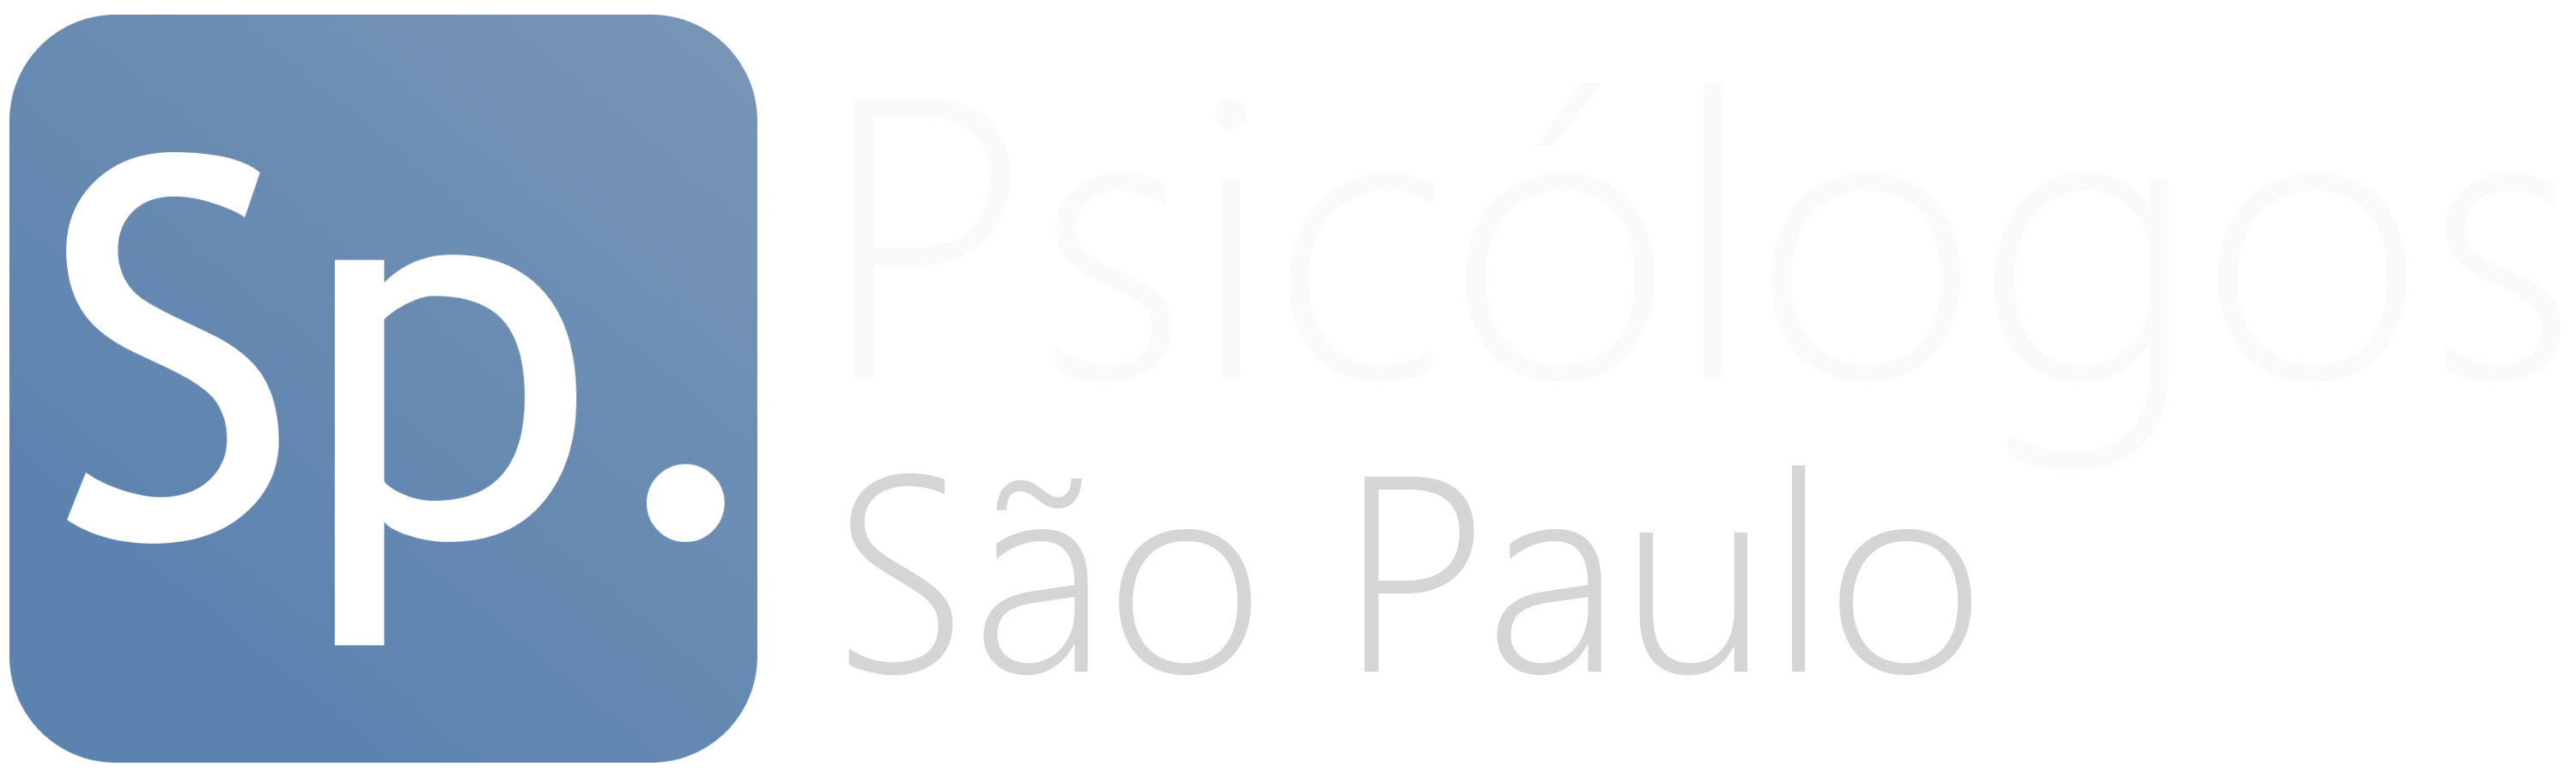 Psicólogos São Paulo - psicólogos online e presencial